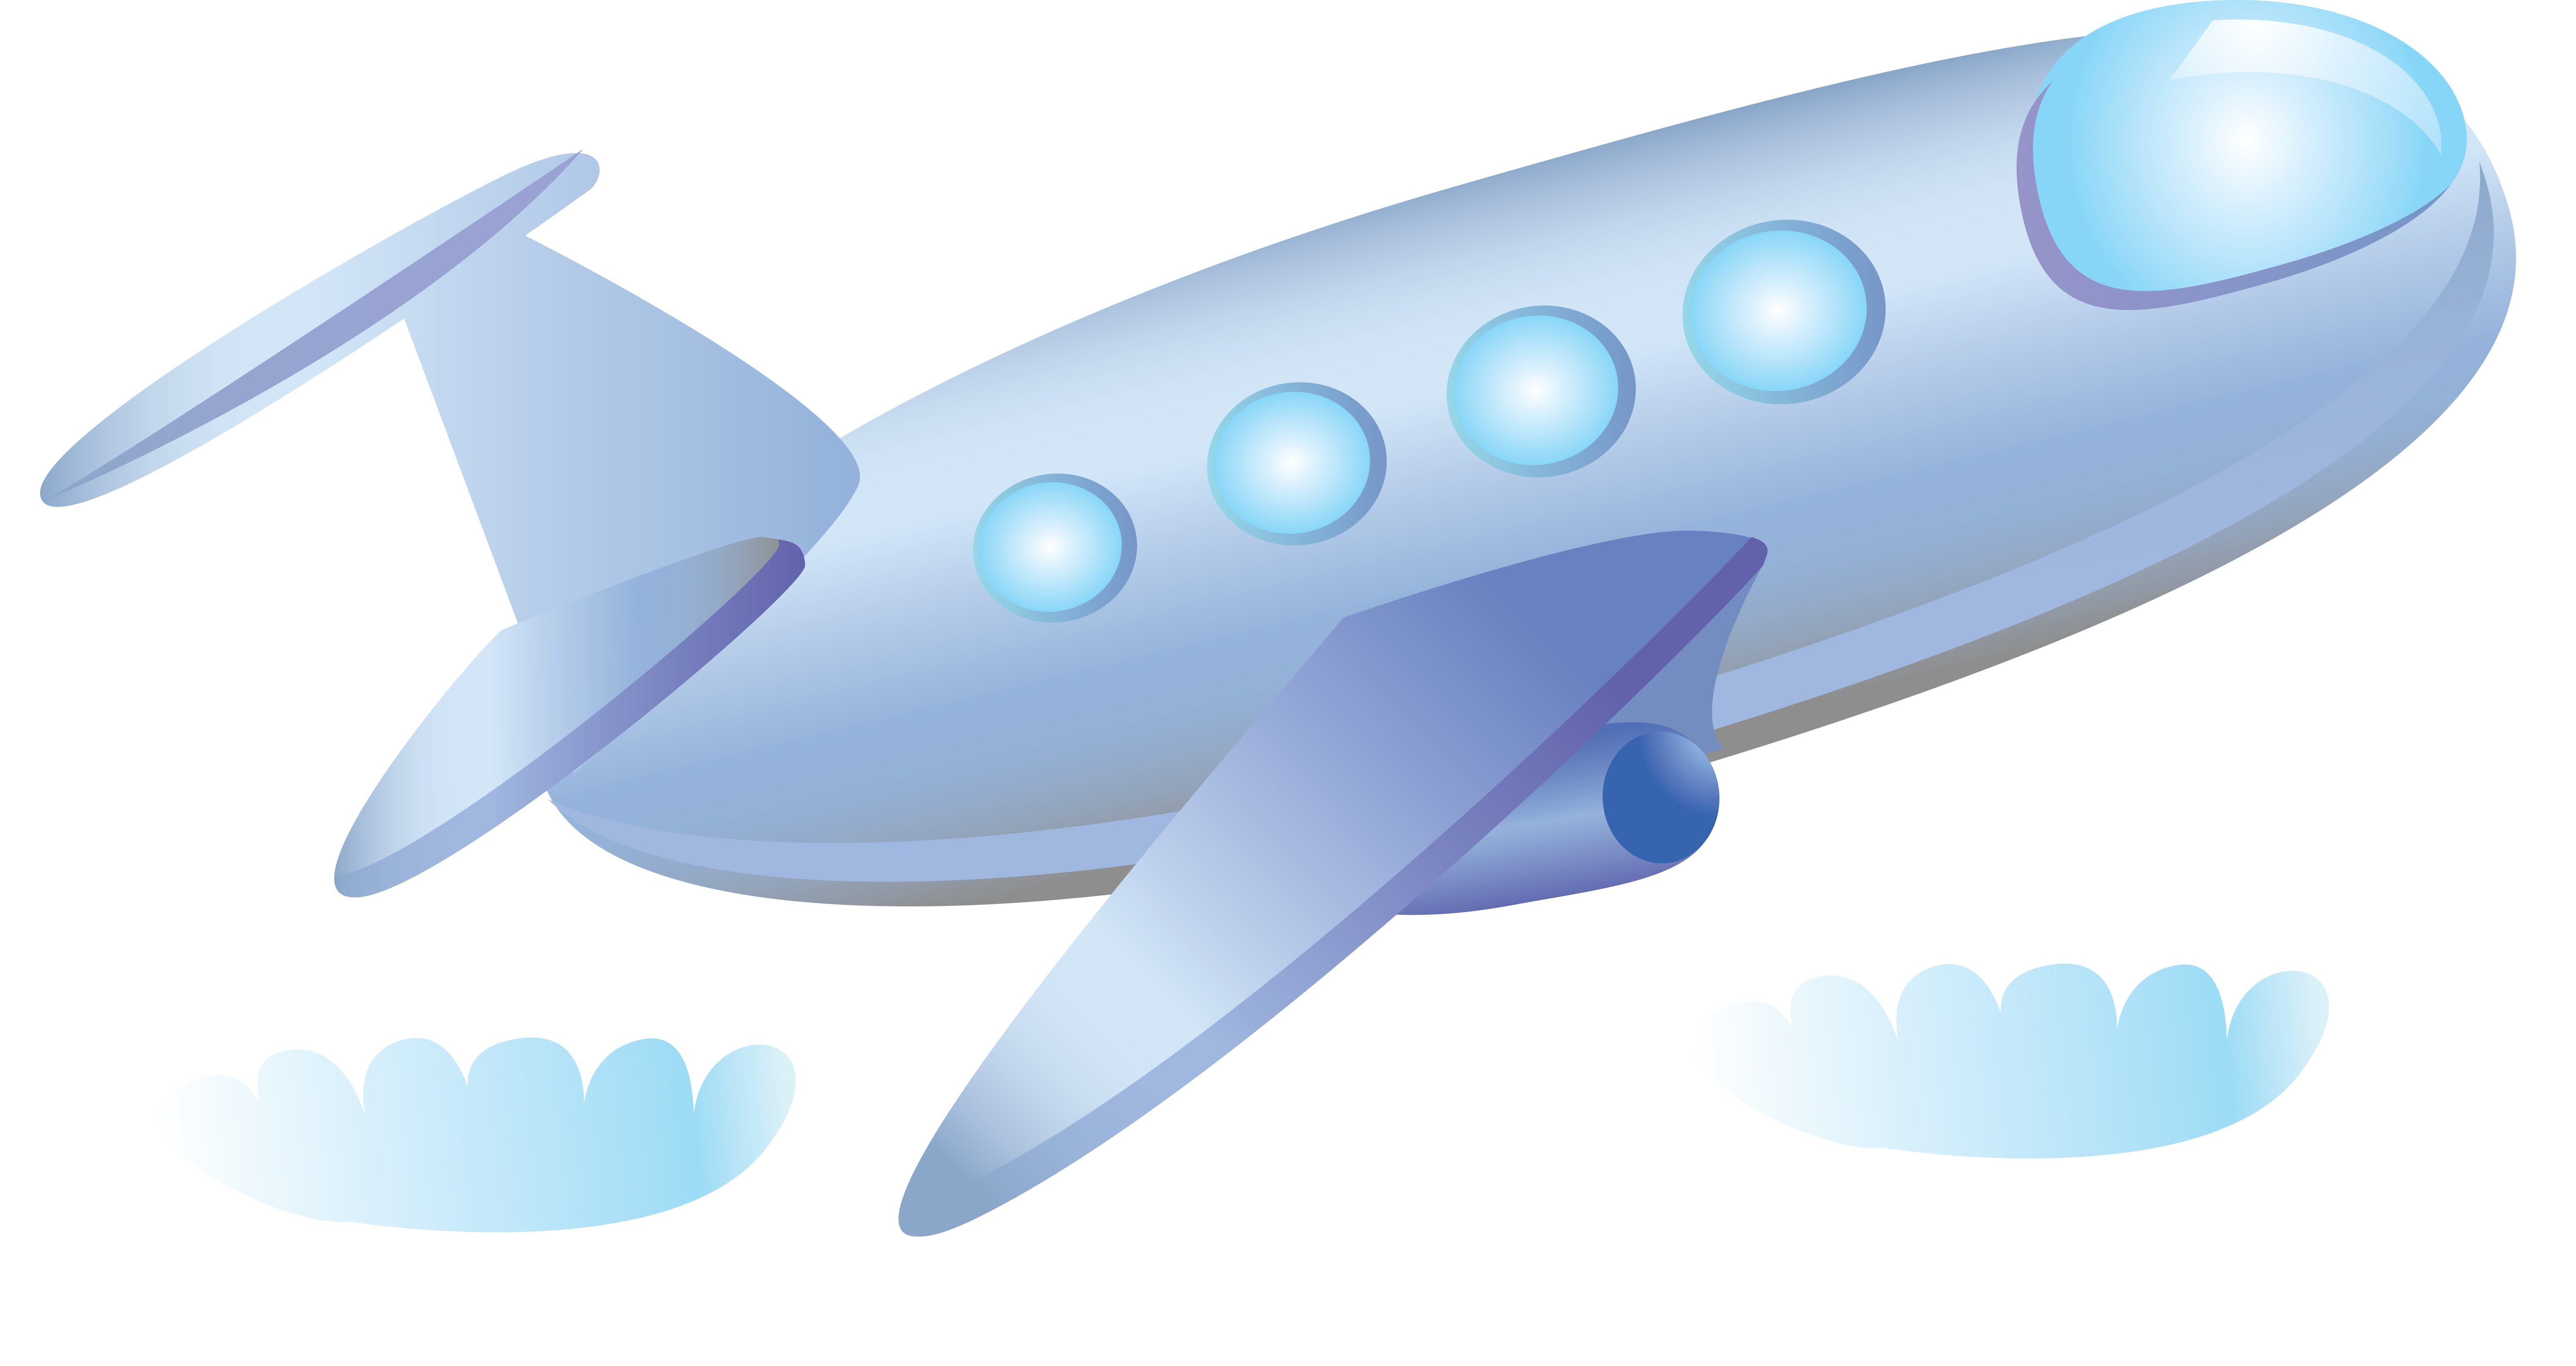 airplane, plane PNG